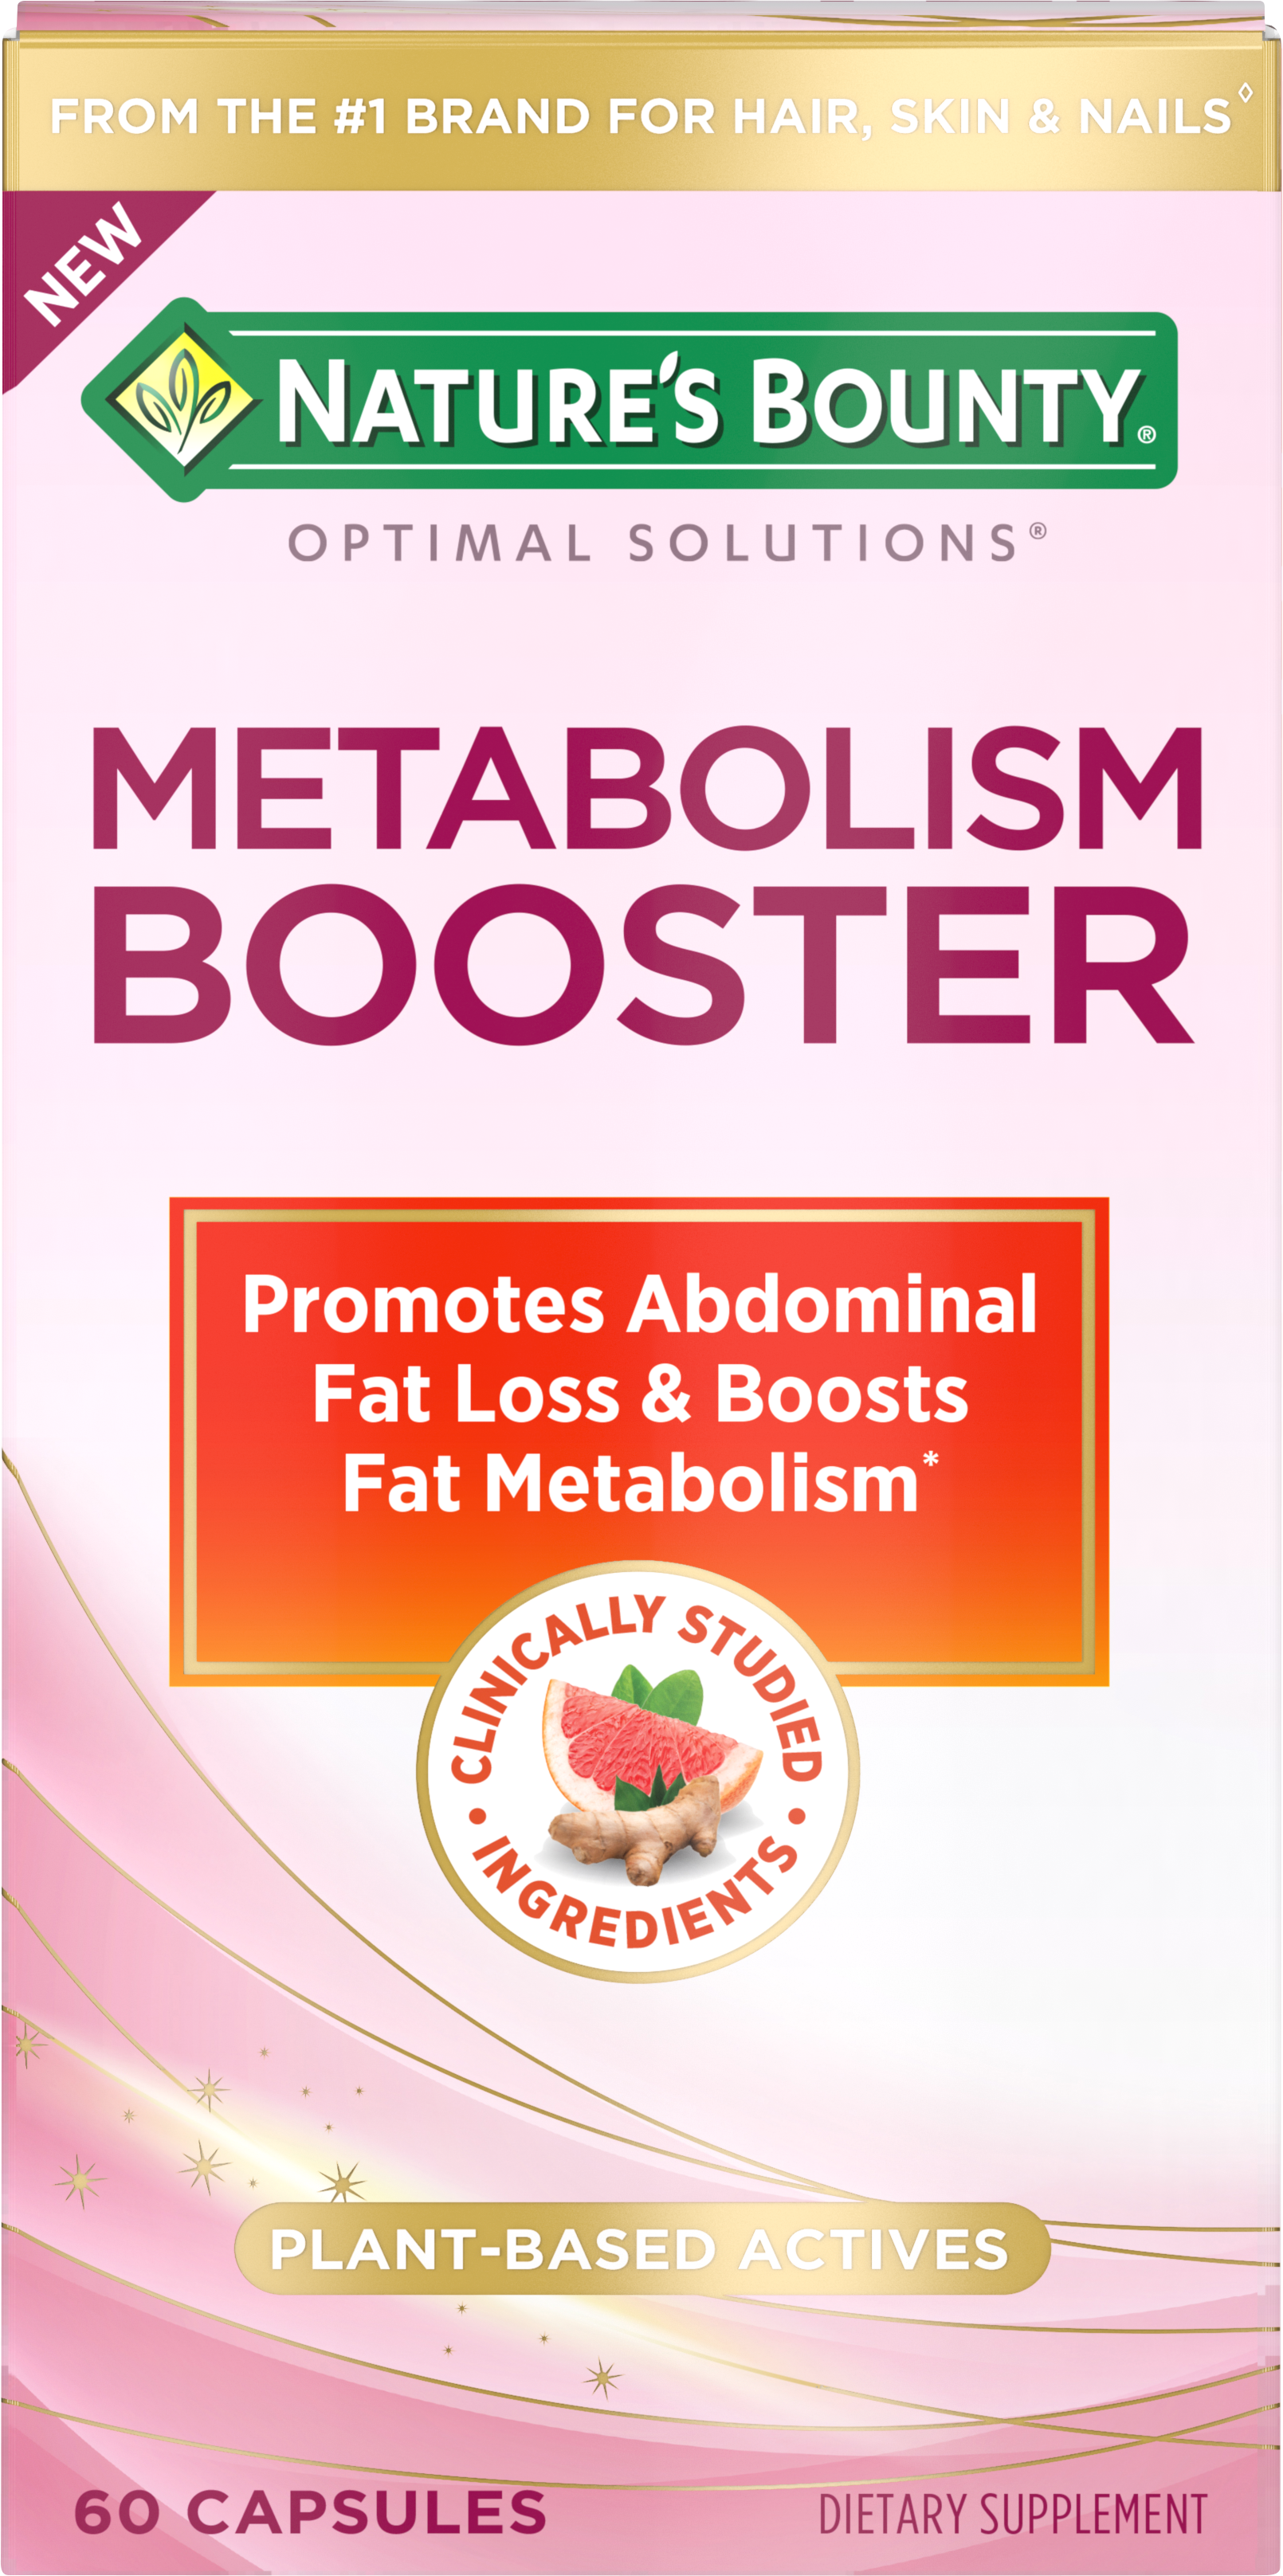 Natural metabolism-boosting solutions